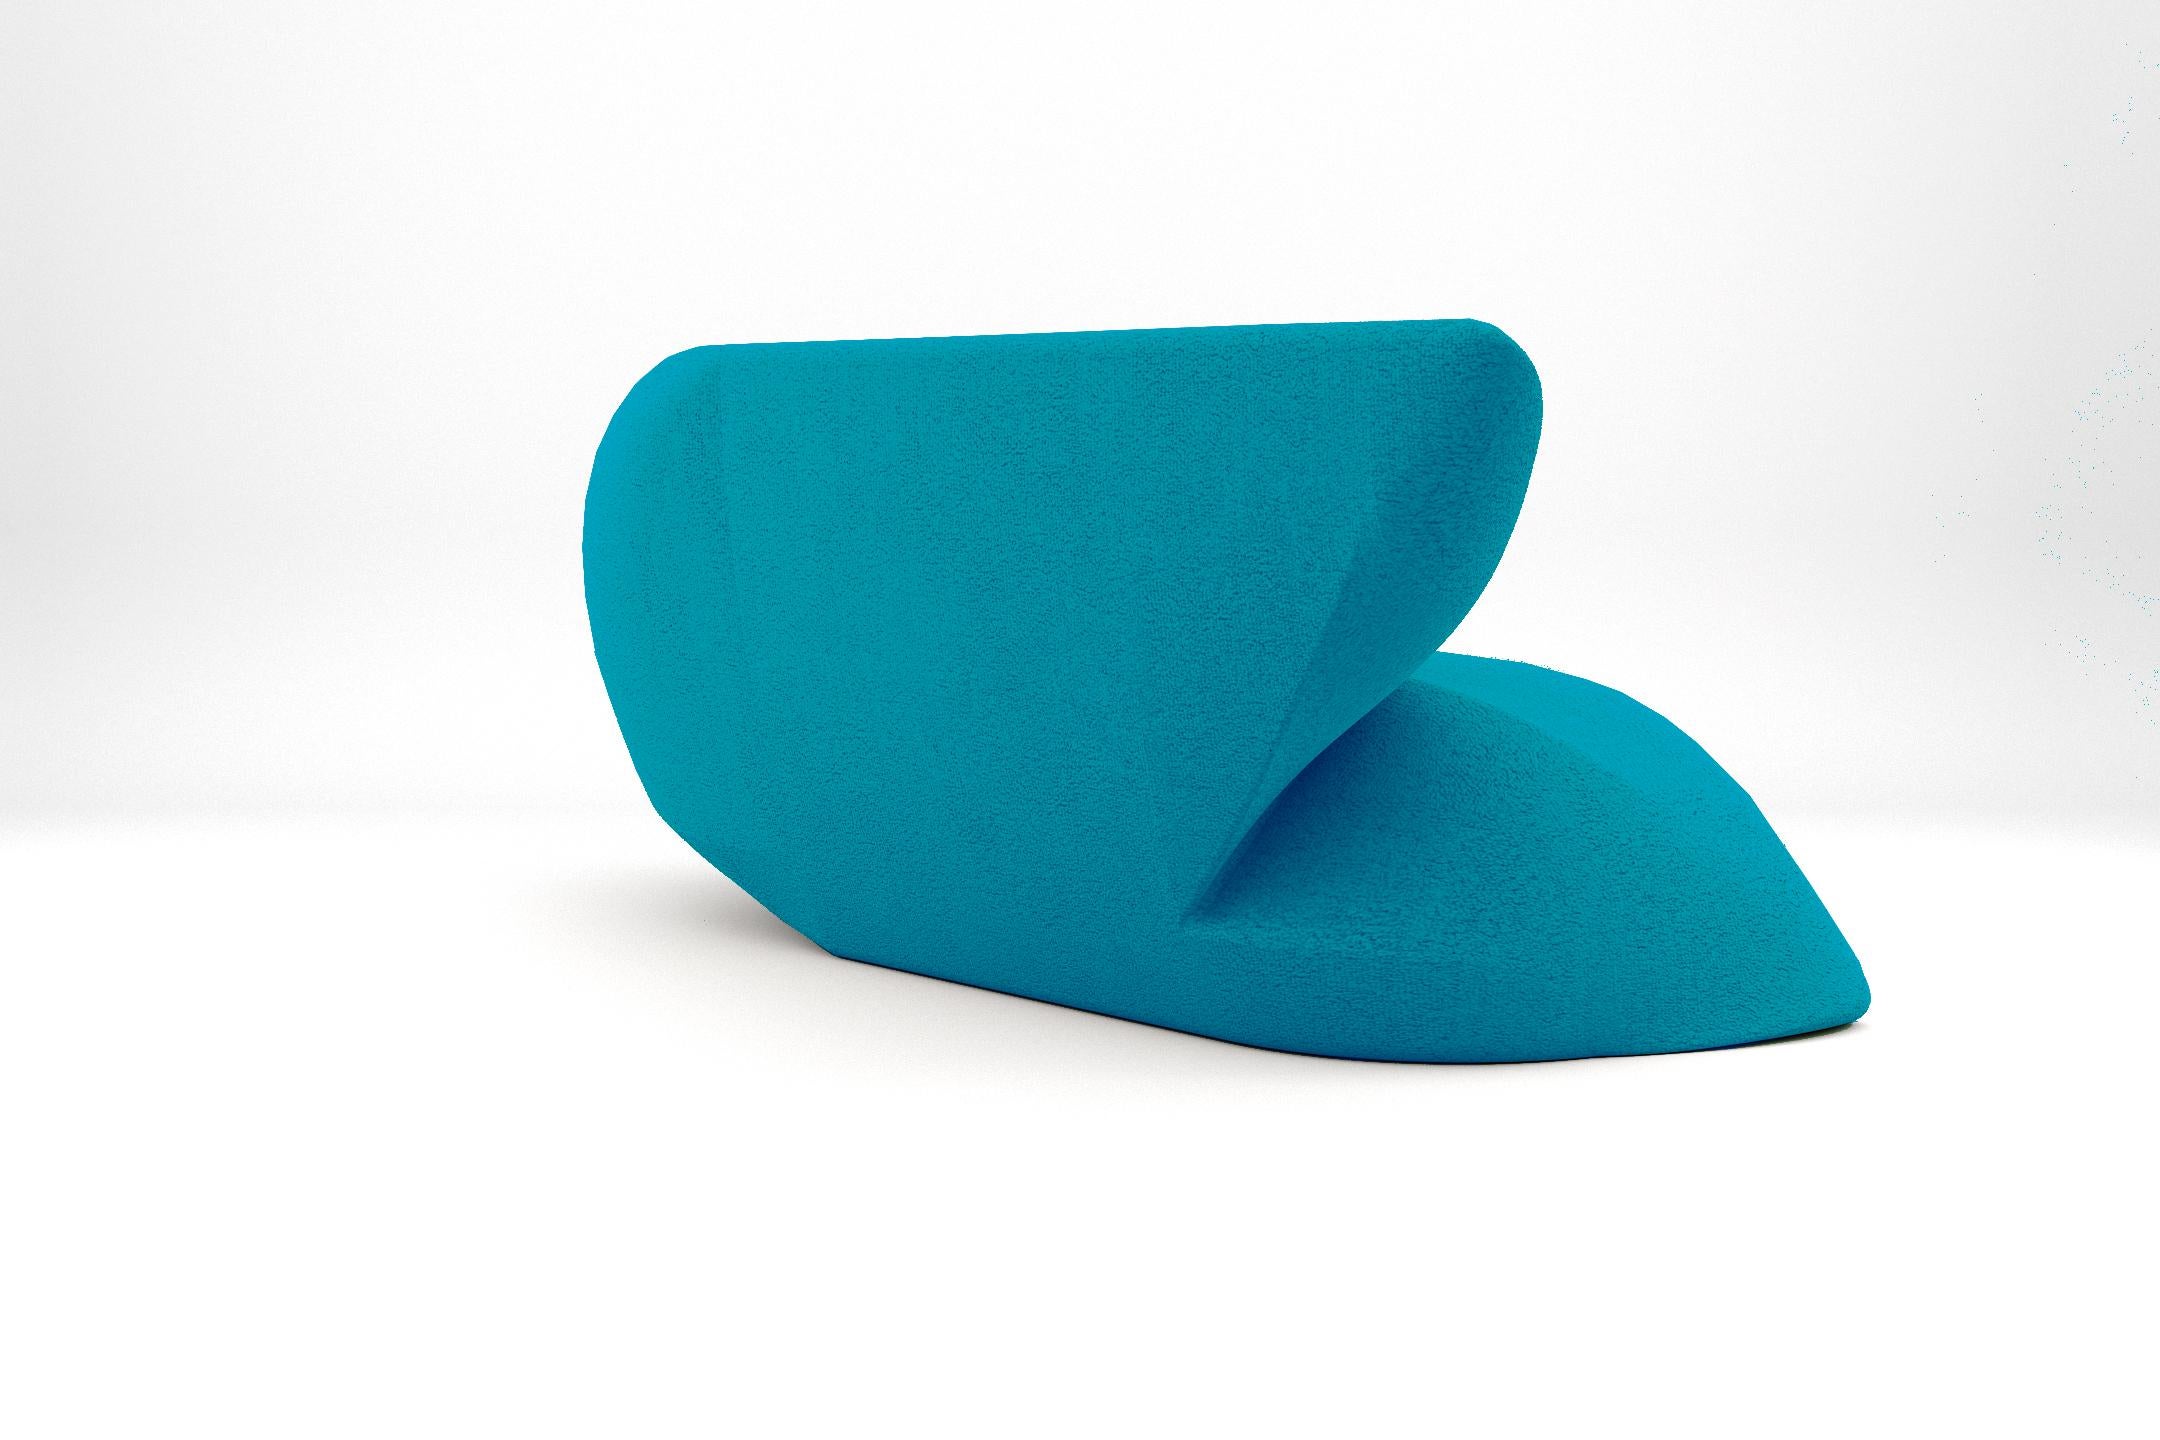 European Delta Sofa - Modern Sky Blue Upholstered Two Seat Sofa For Sale